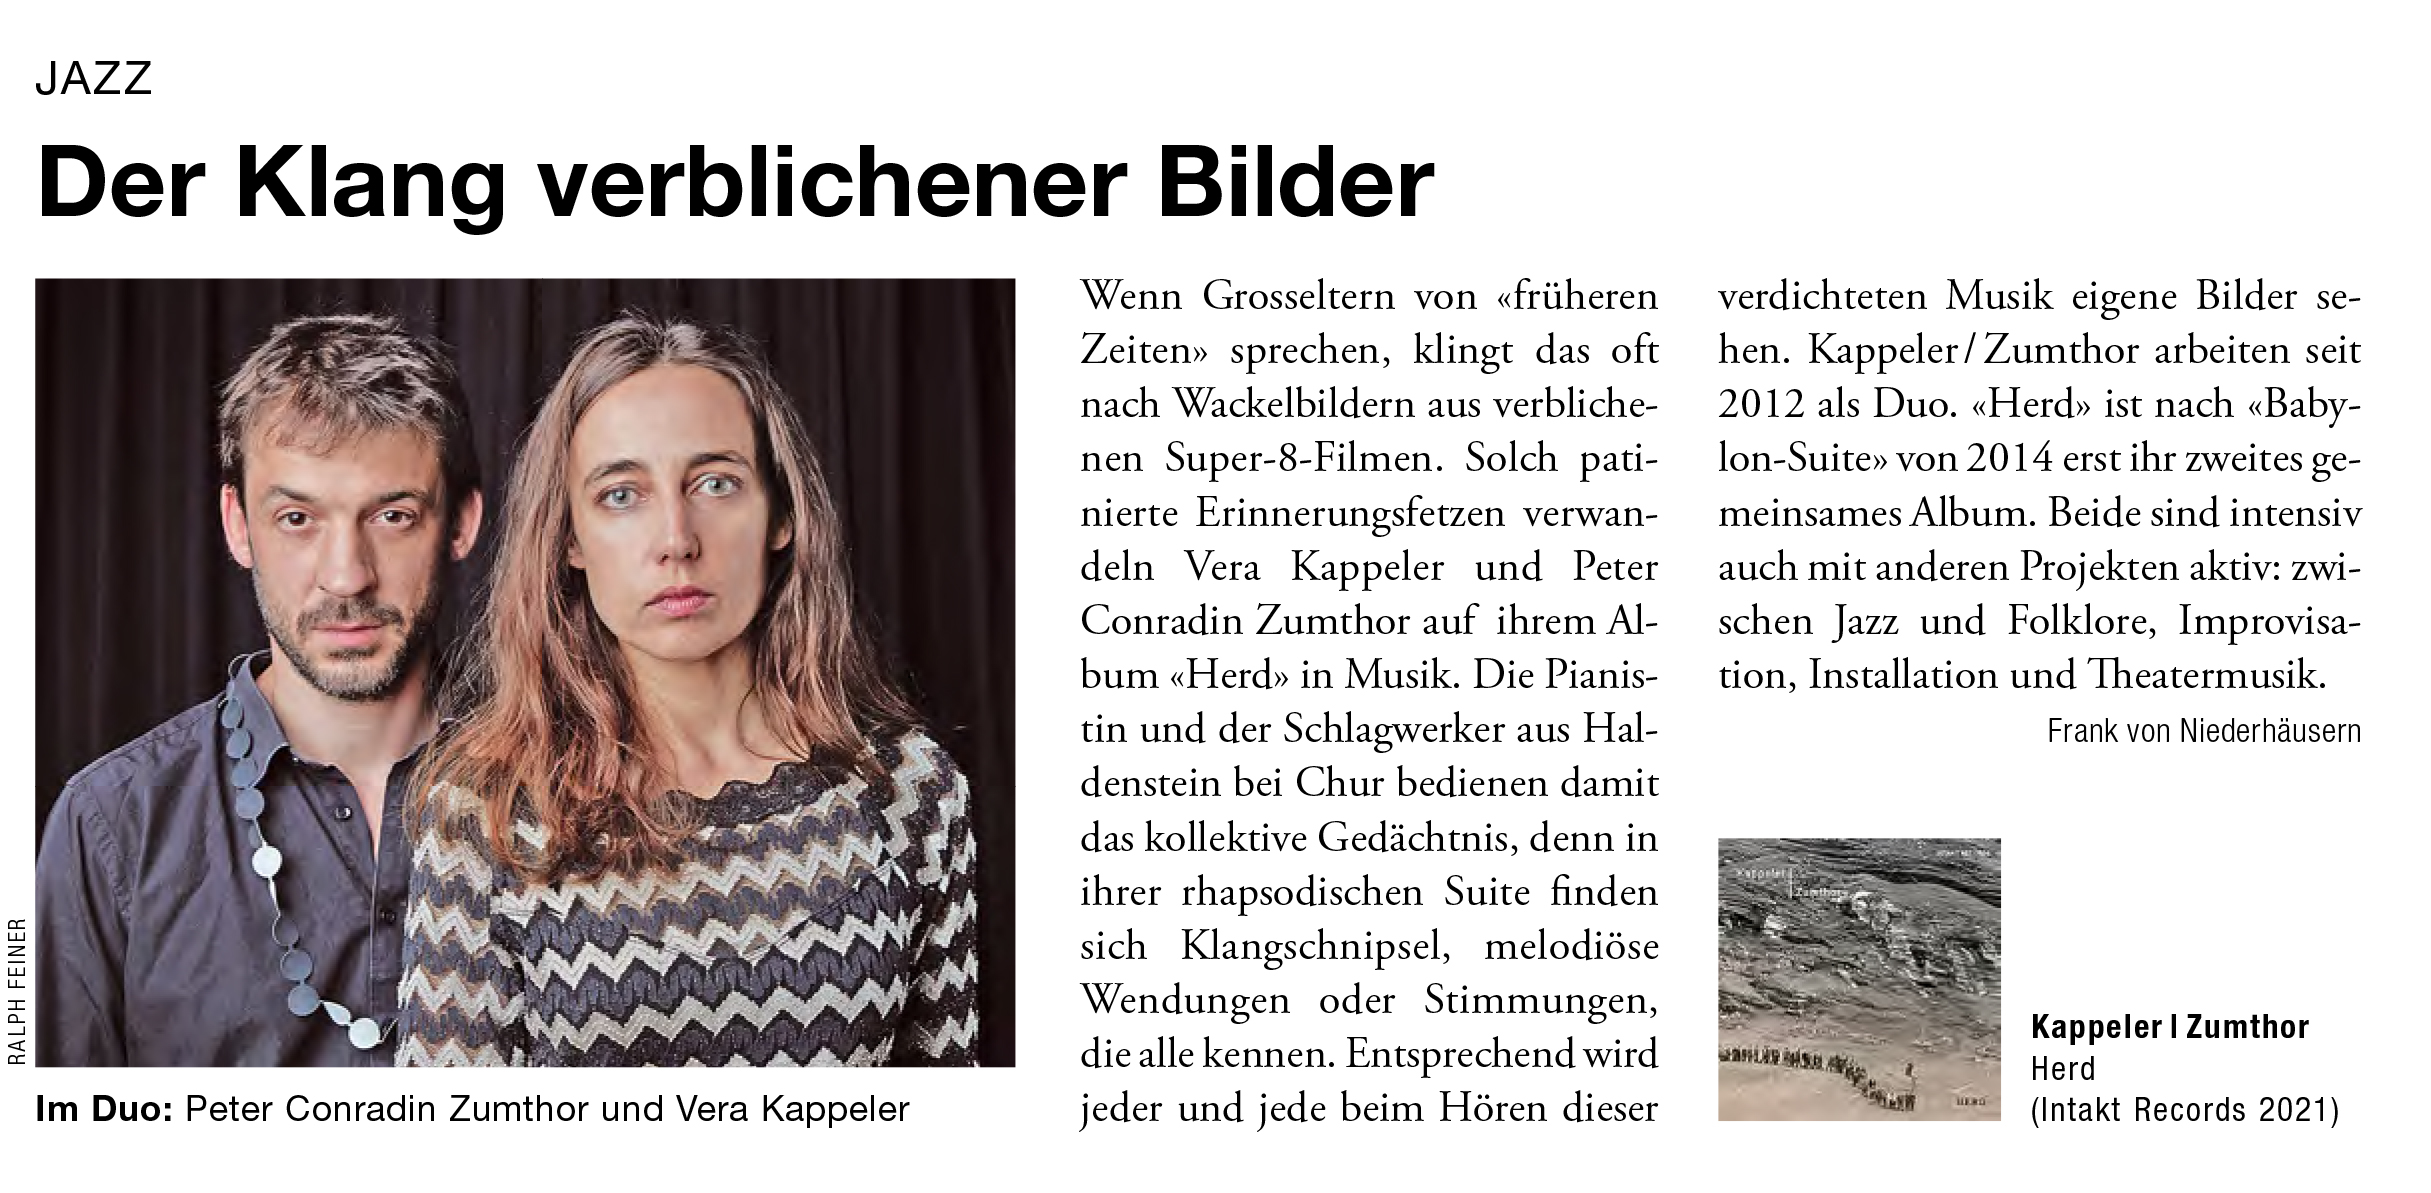 Frank von Niederhäusern, Kulturtipp Magazin, Sept 2021 (DE) Review of 